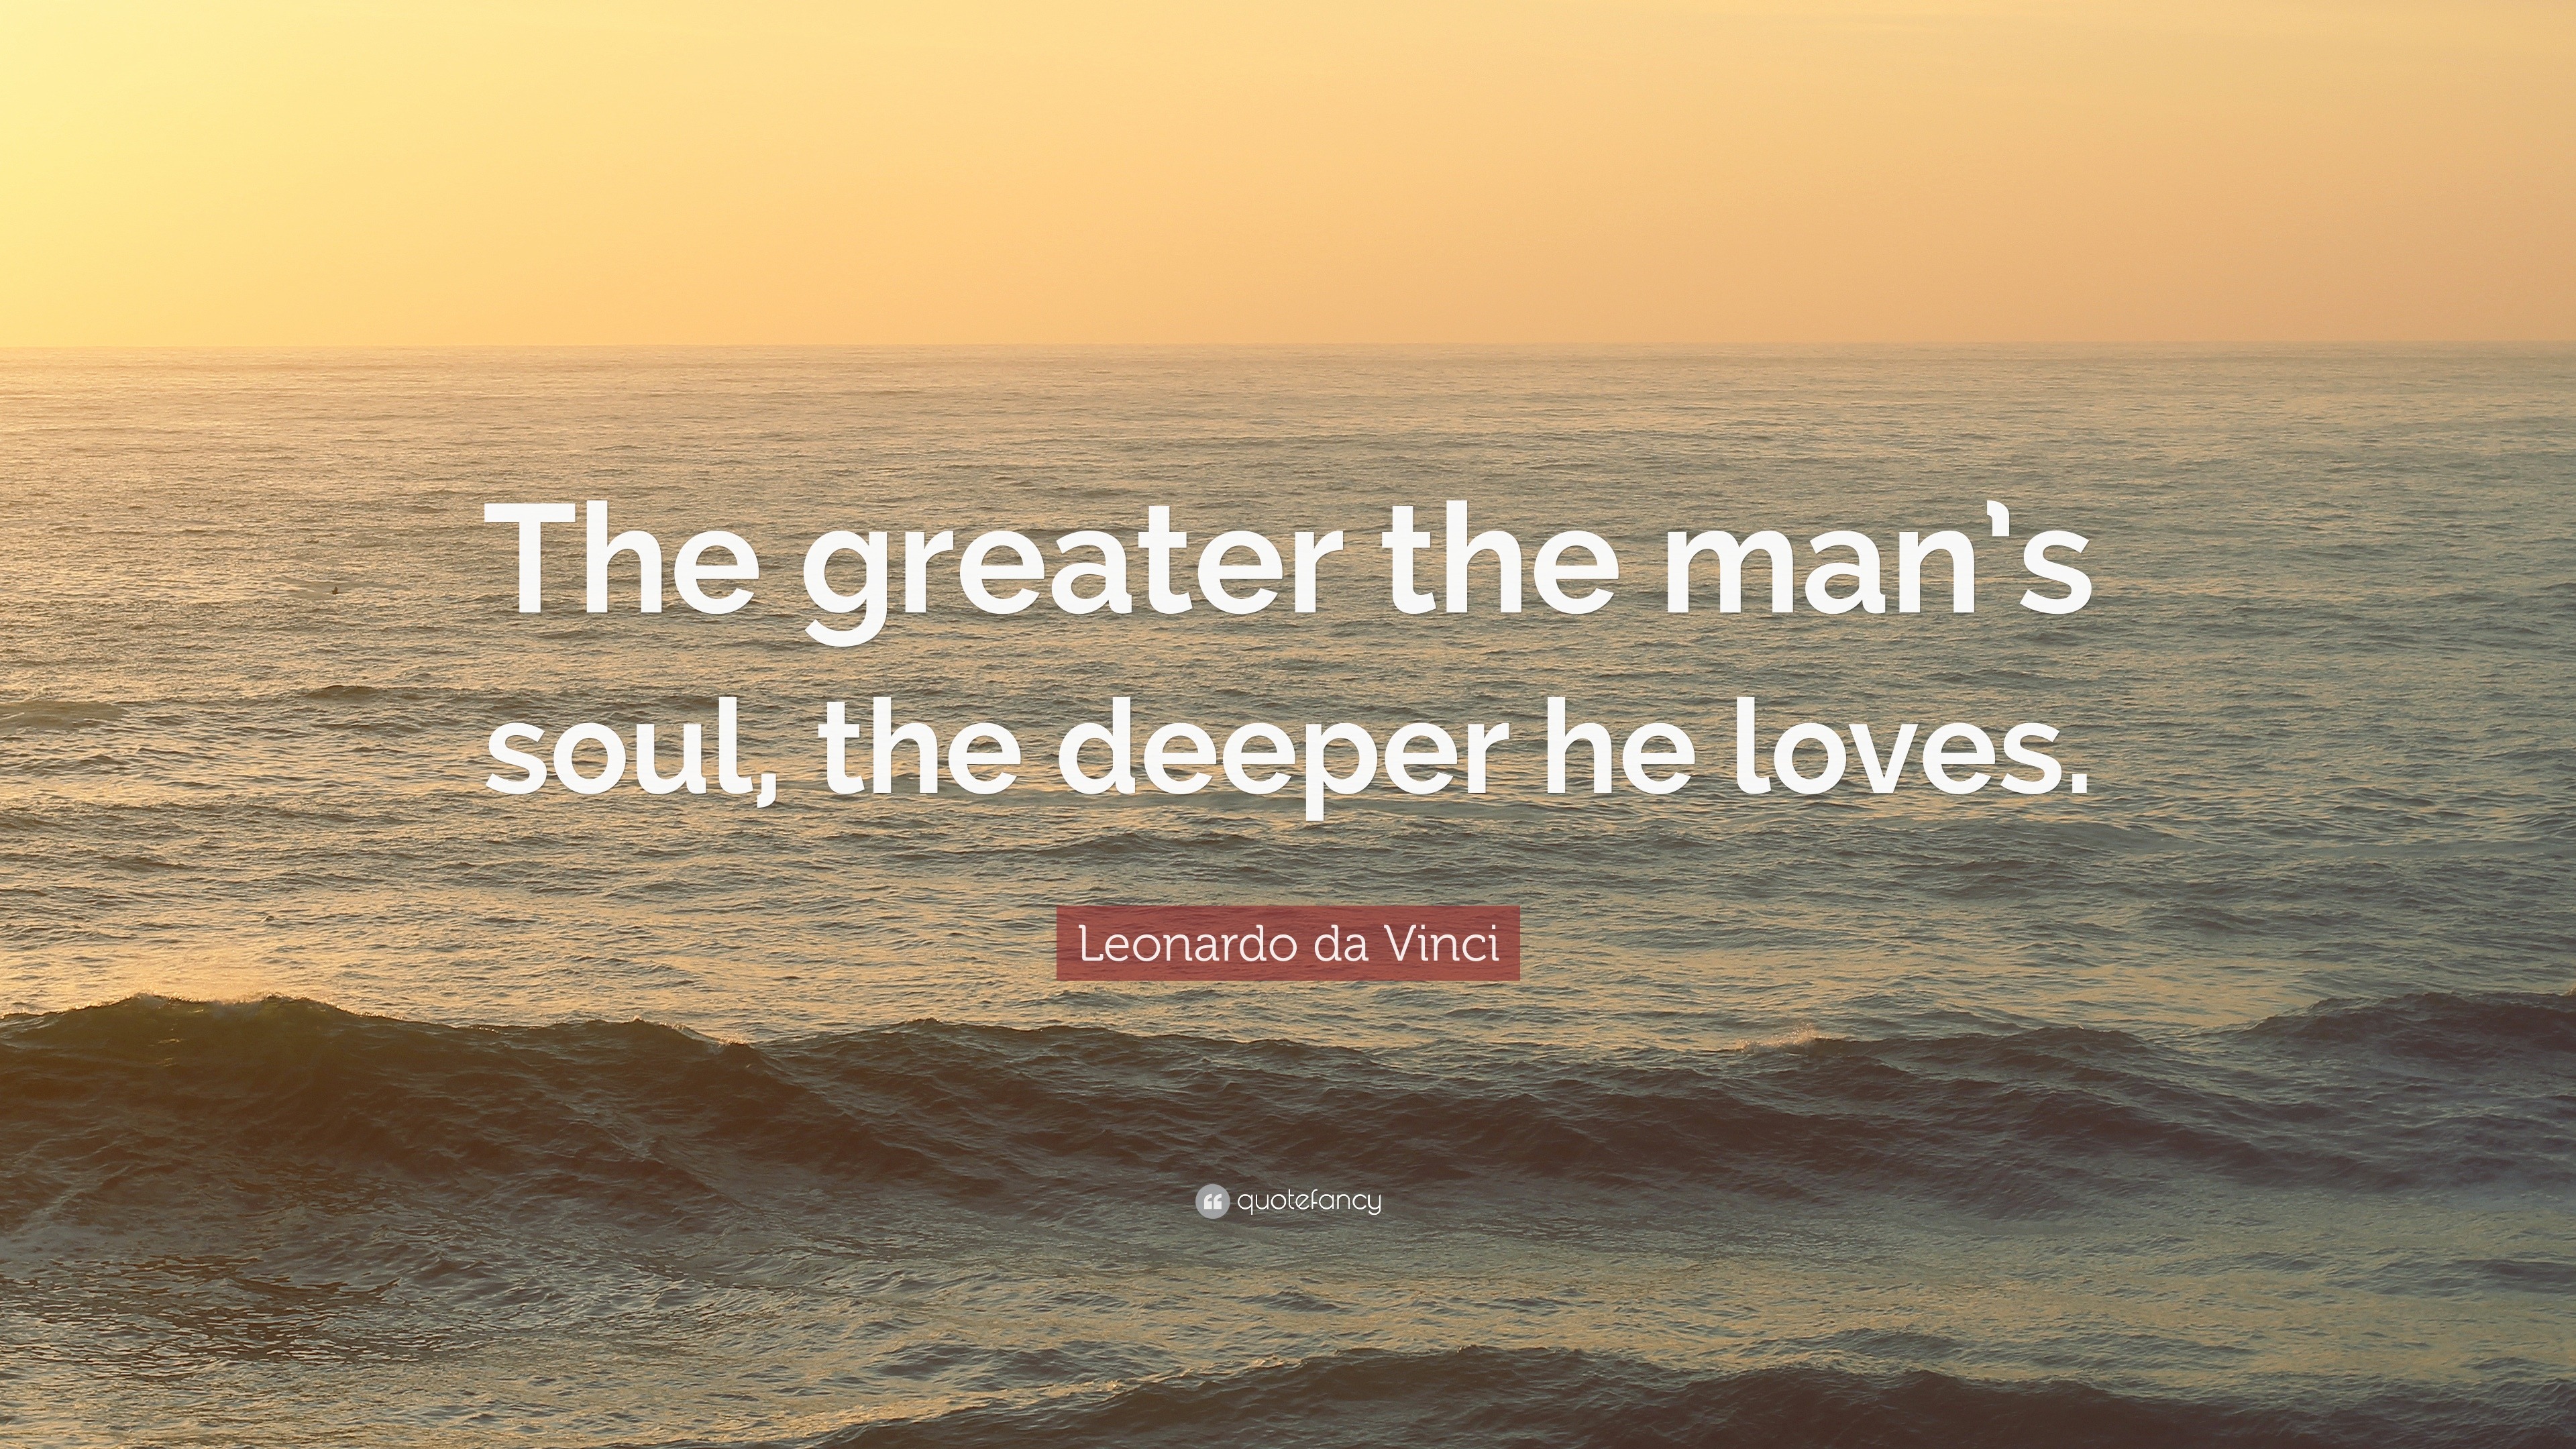 Leonardo da Vinci Quote: “The greater the man’s soul, the deeper he loves.”